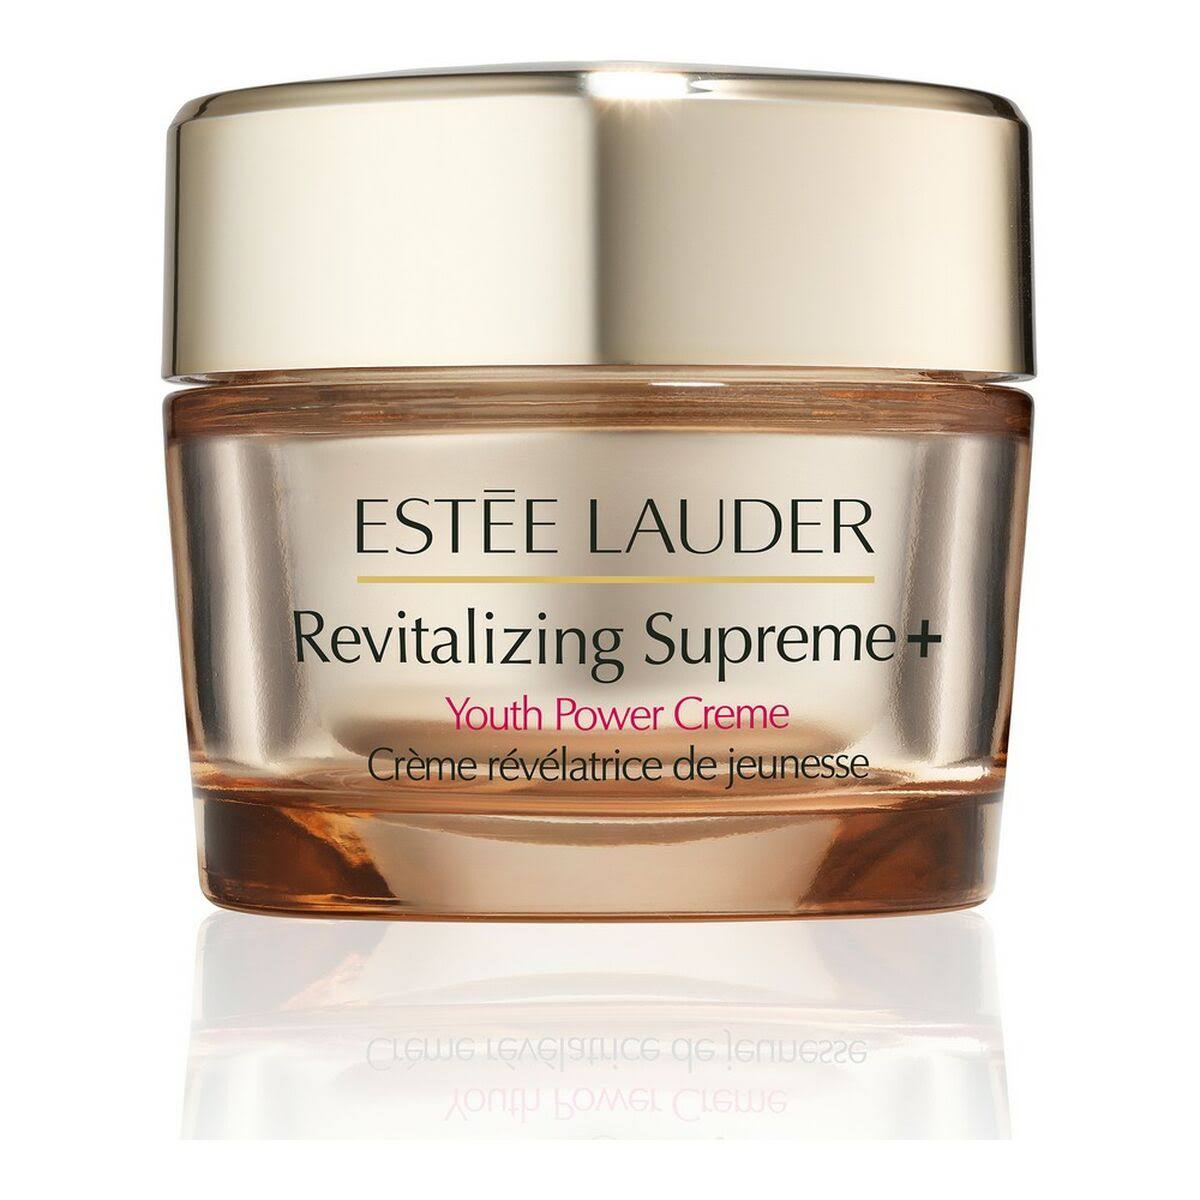 Estee Lauder Revitalizing Supreme + 50ml Youth Power Creme